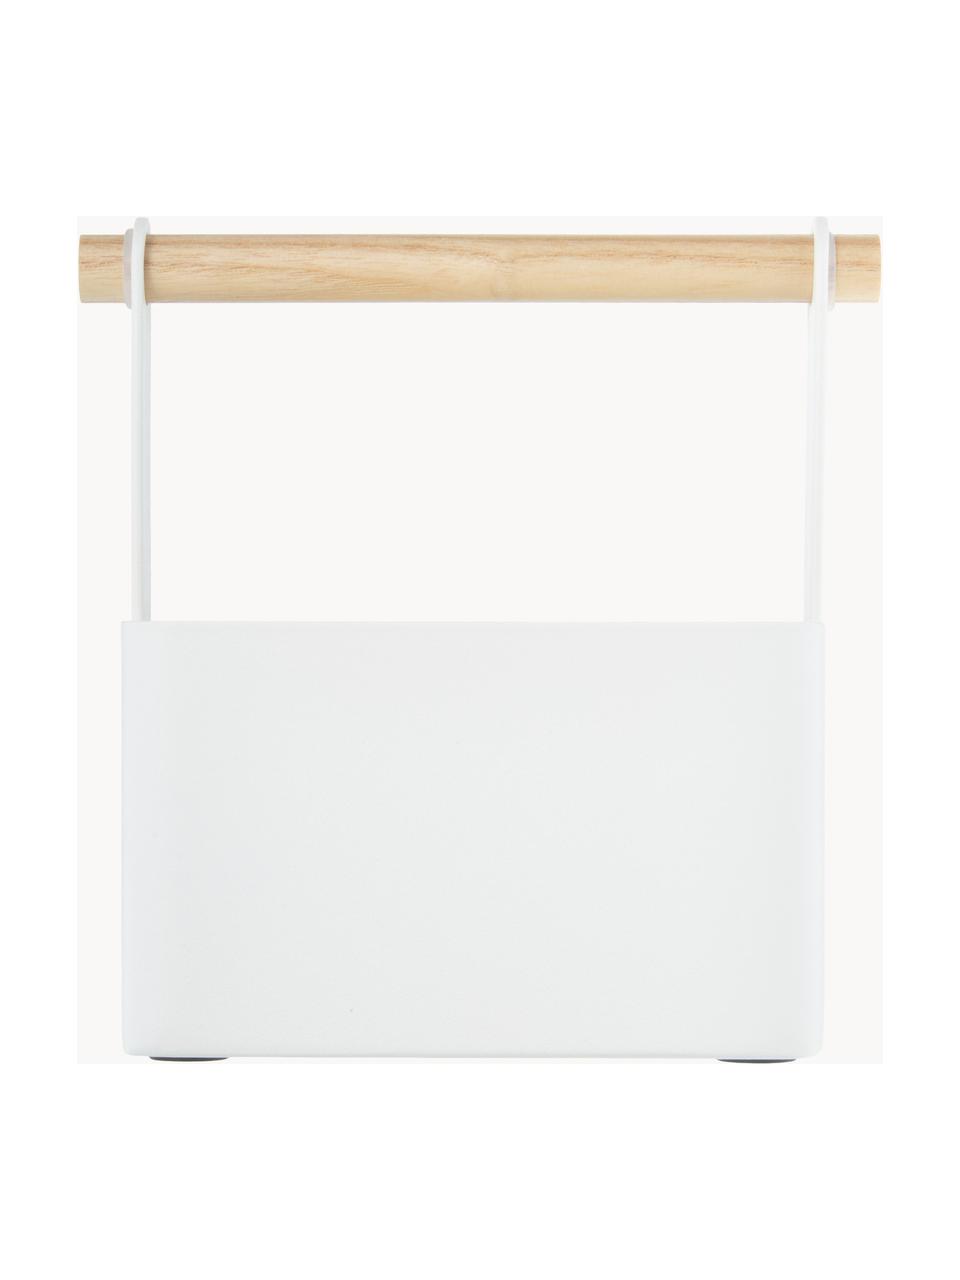 Aufbewahrungskorb Tosca, Box: Stahl, lackiert, Griff: Holz, Weiß, Helles Holz, B 16 x H 16 cm